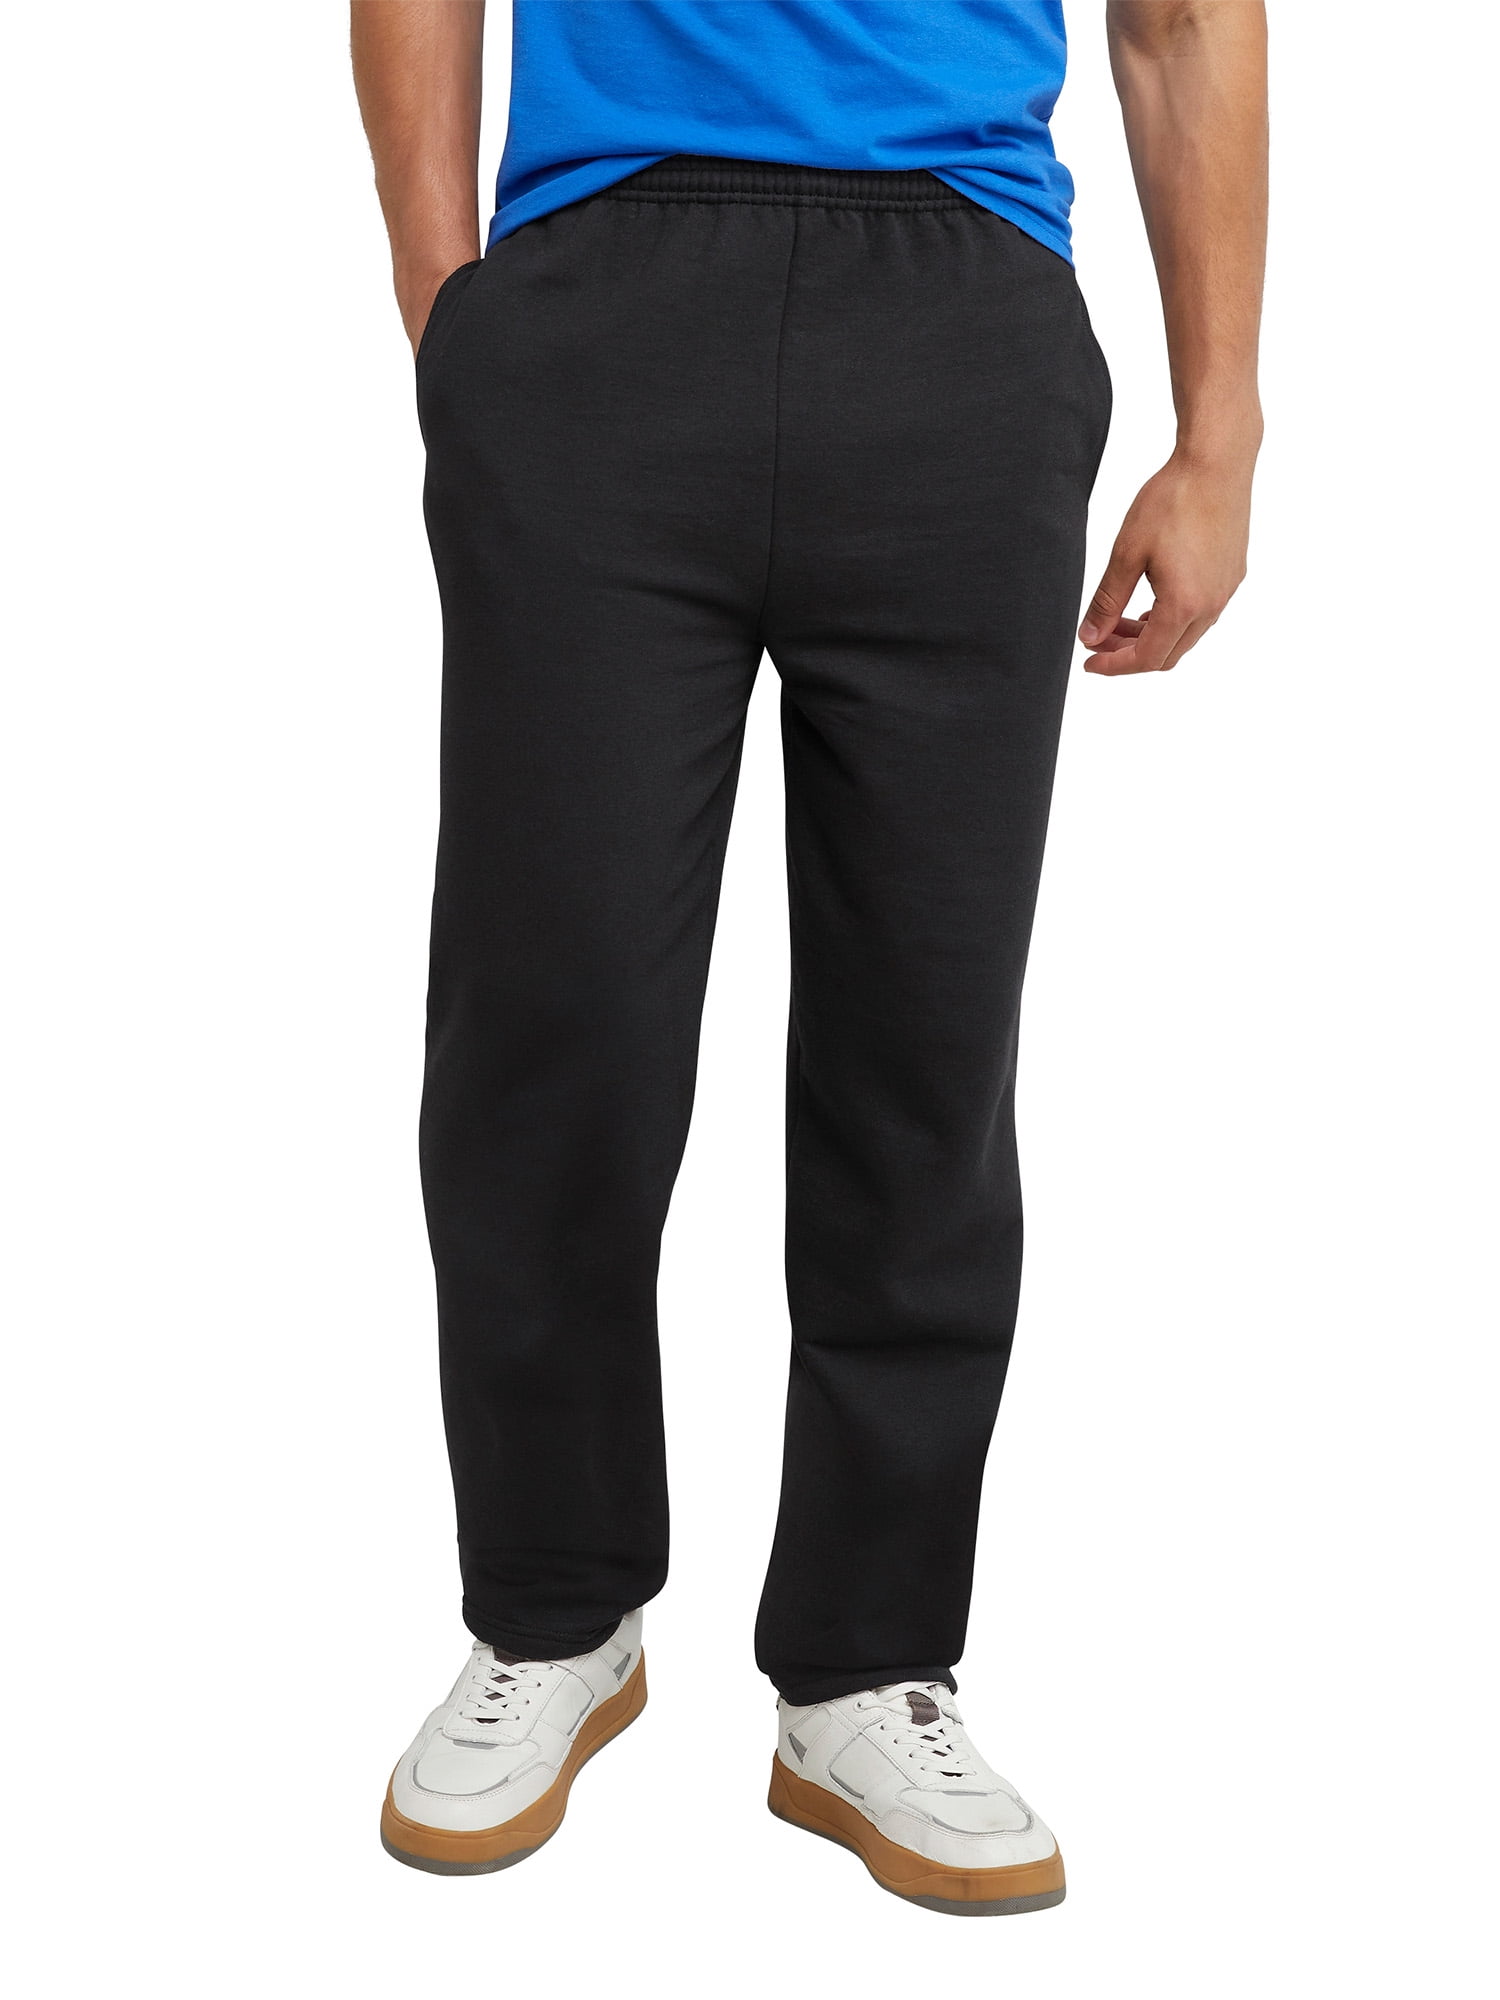 Men's Athletic Sweats, Zip-Fly Sweatpants with Internal Drawstring Charcoal Heather Xxxl, Cotton | L.L.Bean, 30 Inseam